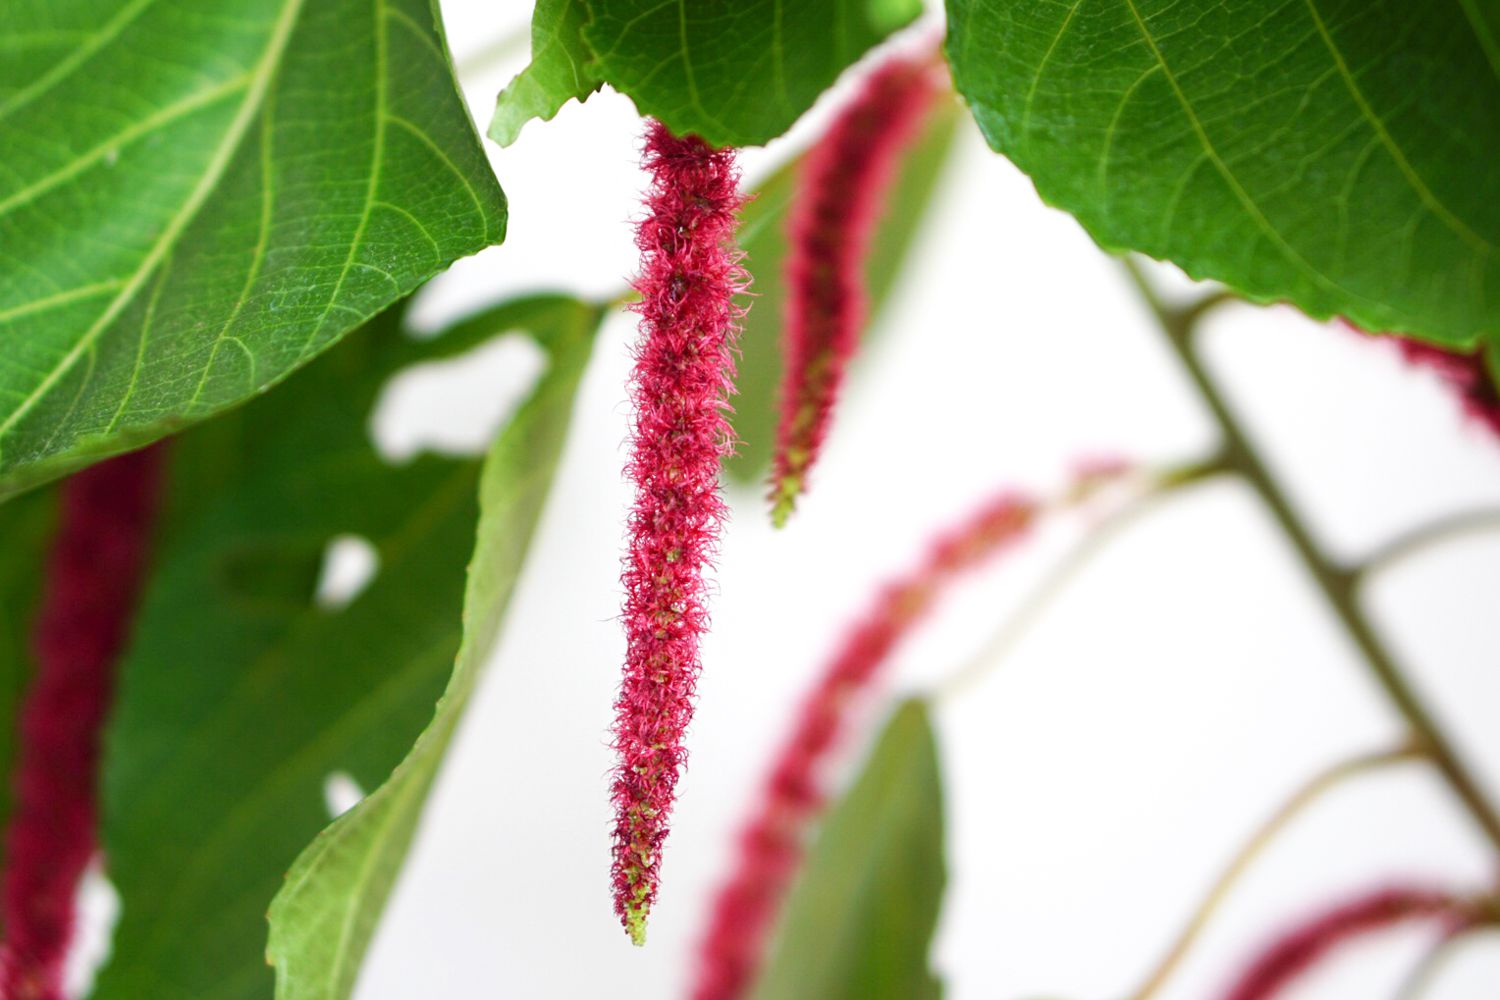 Acalypha planta con flores rojas como cepillos de botella colgando closeup